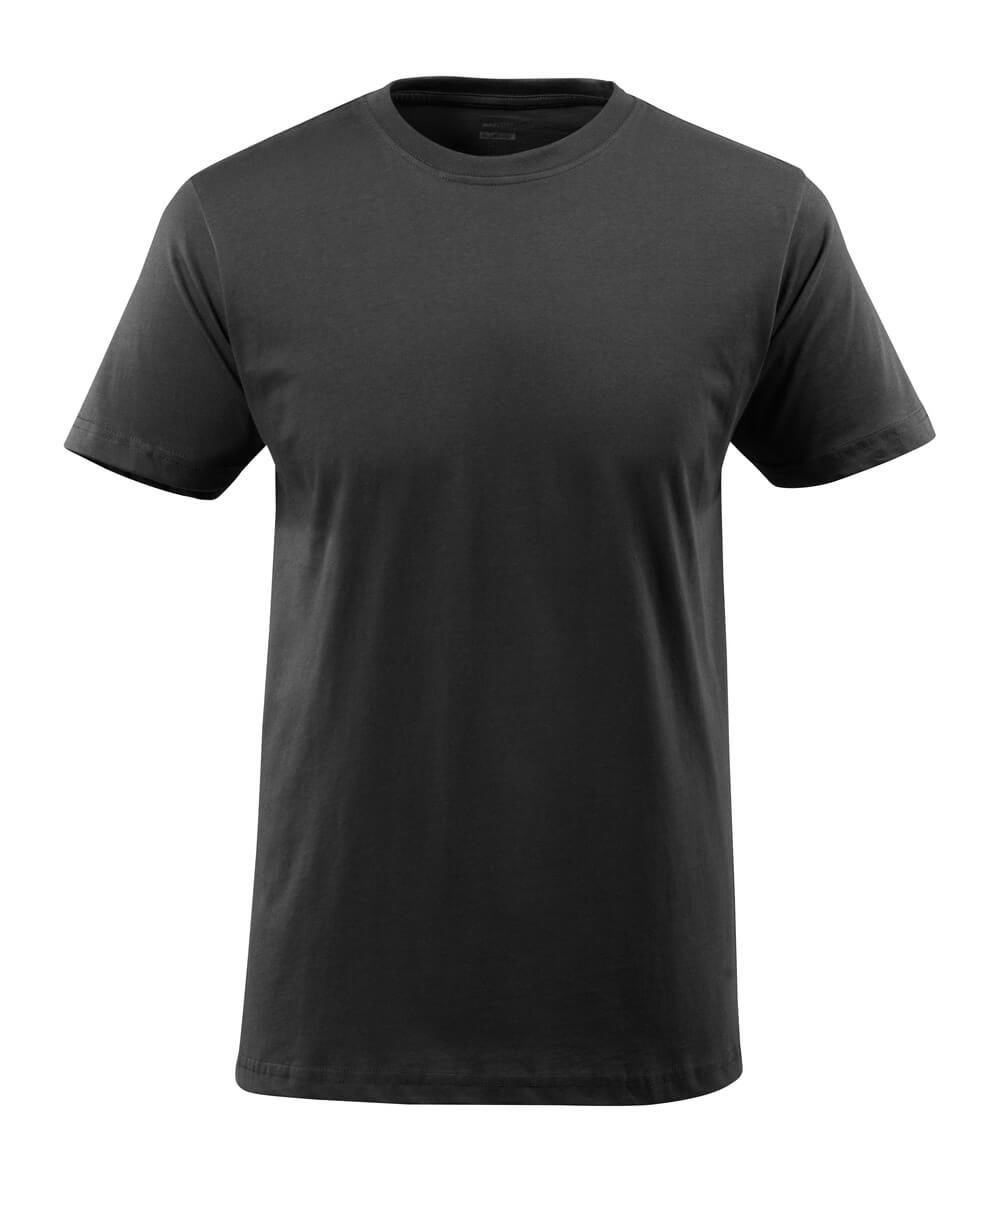 Mascot Workwear Black Cotton Short Sleeve T-Shirt, UK- L, EUR- L